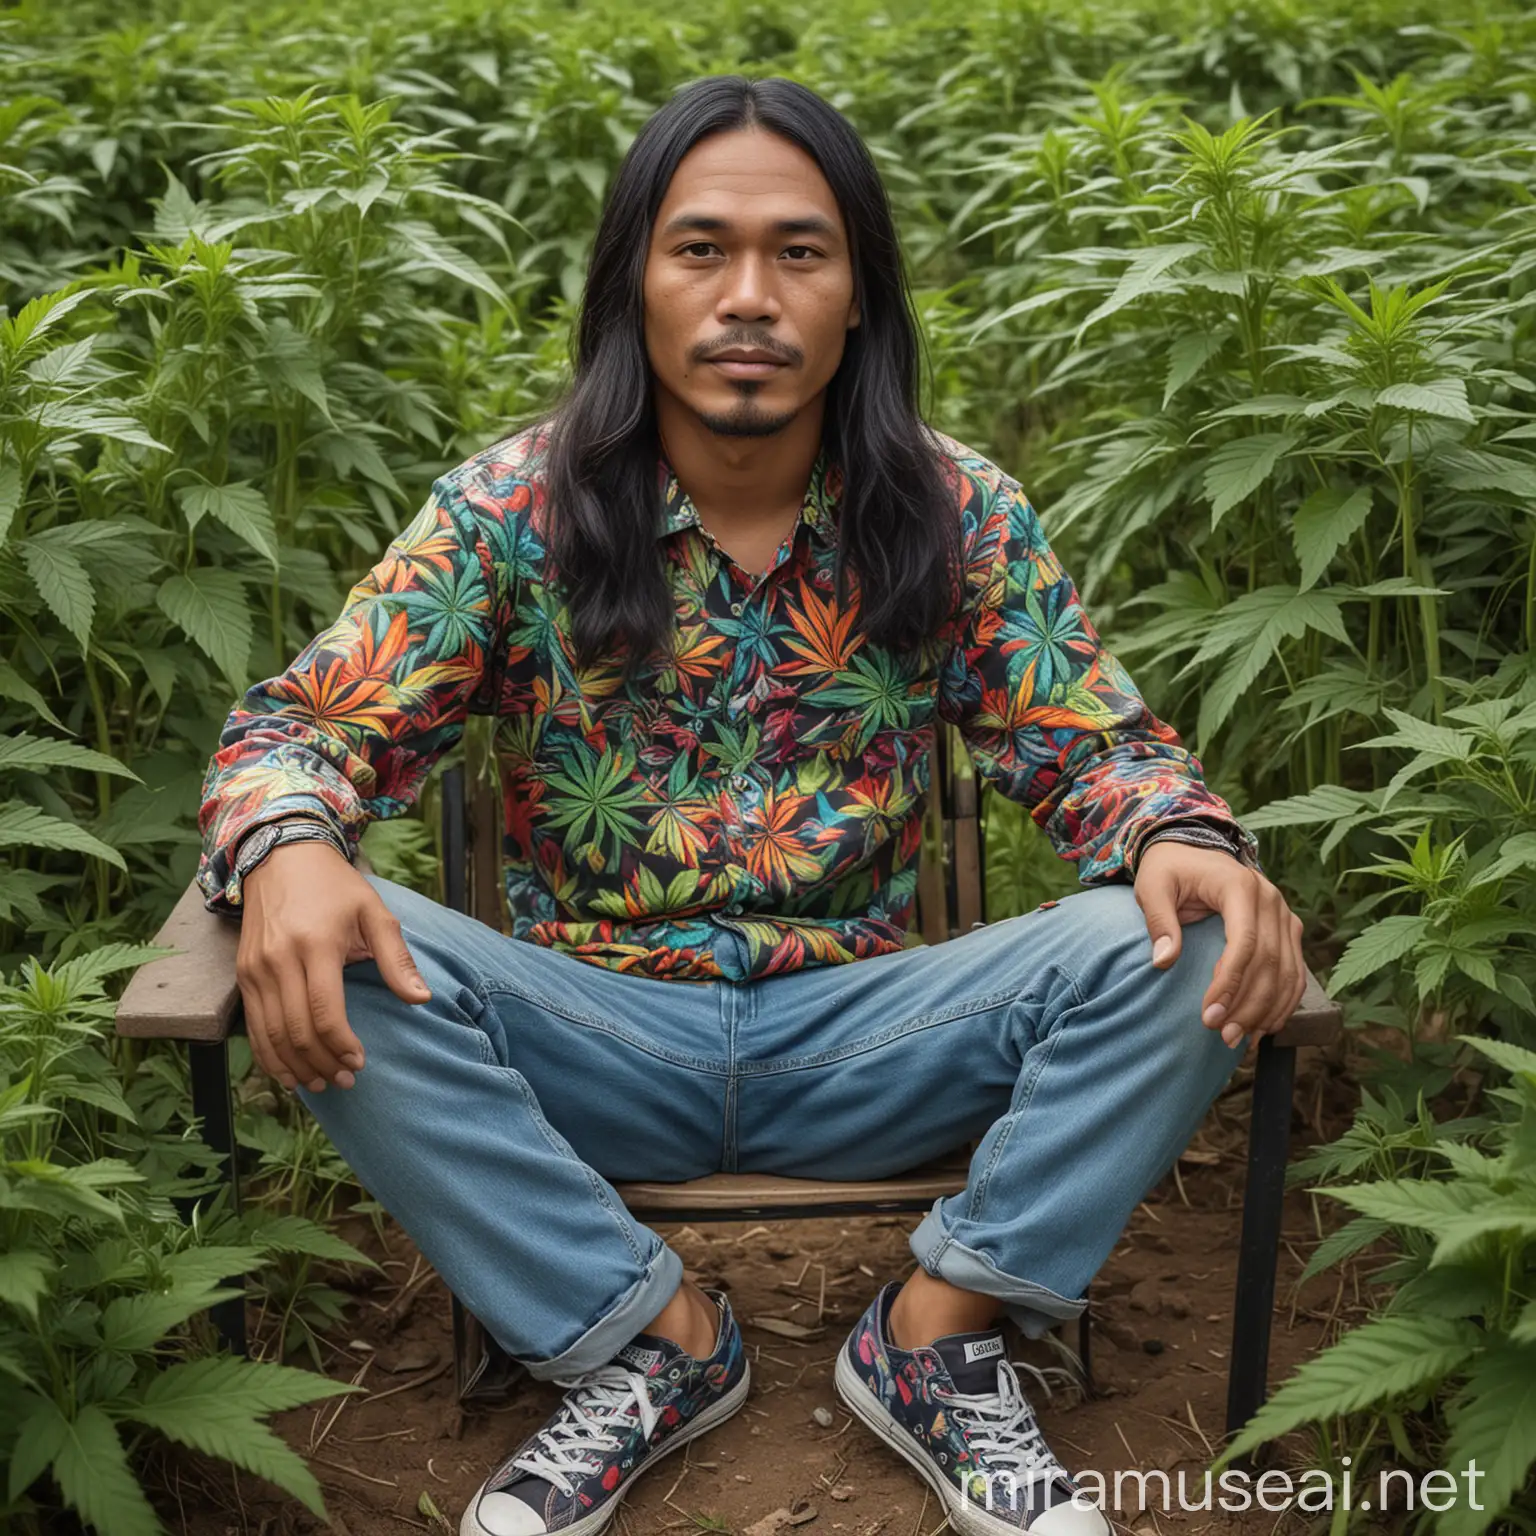 realistic photo laki laki indonesia, age 40, berbadan sedikit besar,rambut panjang, memakai kaos psychedelic, celana jeans cutbray, sepatu converse corak daun ganja,duduk dikursi memangku kaki, di tengah ladang ganja